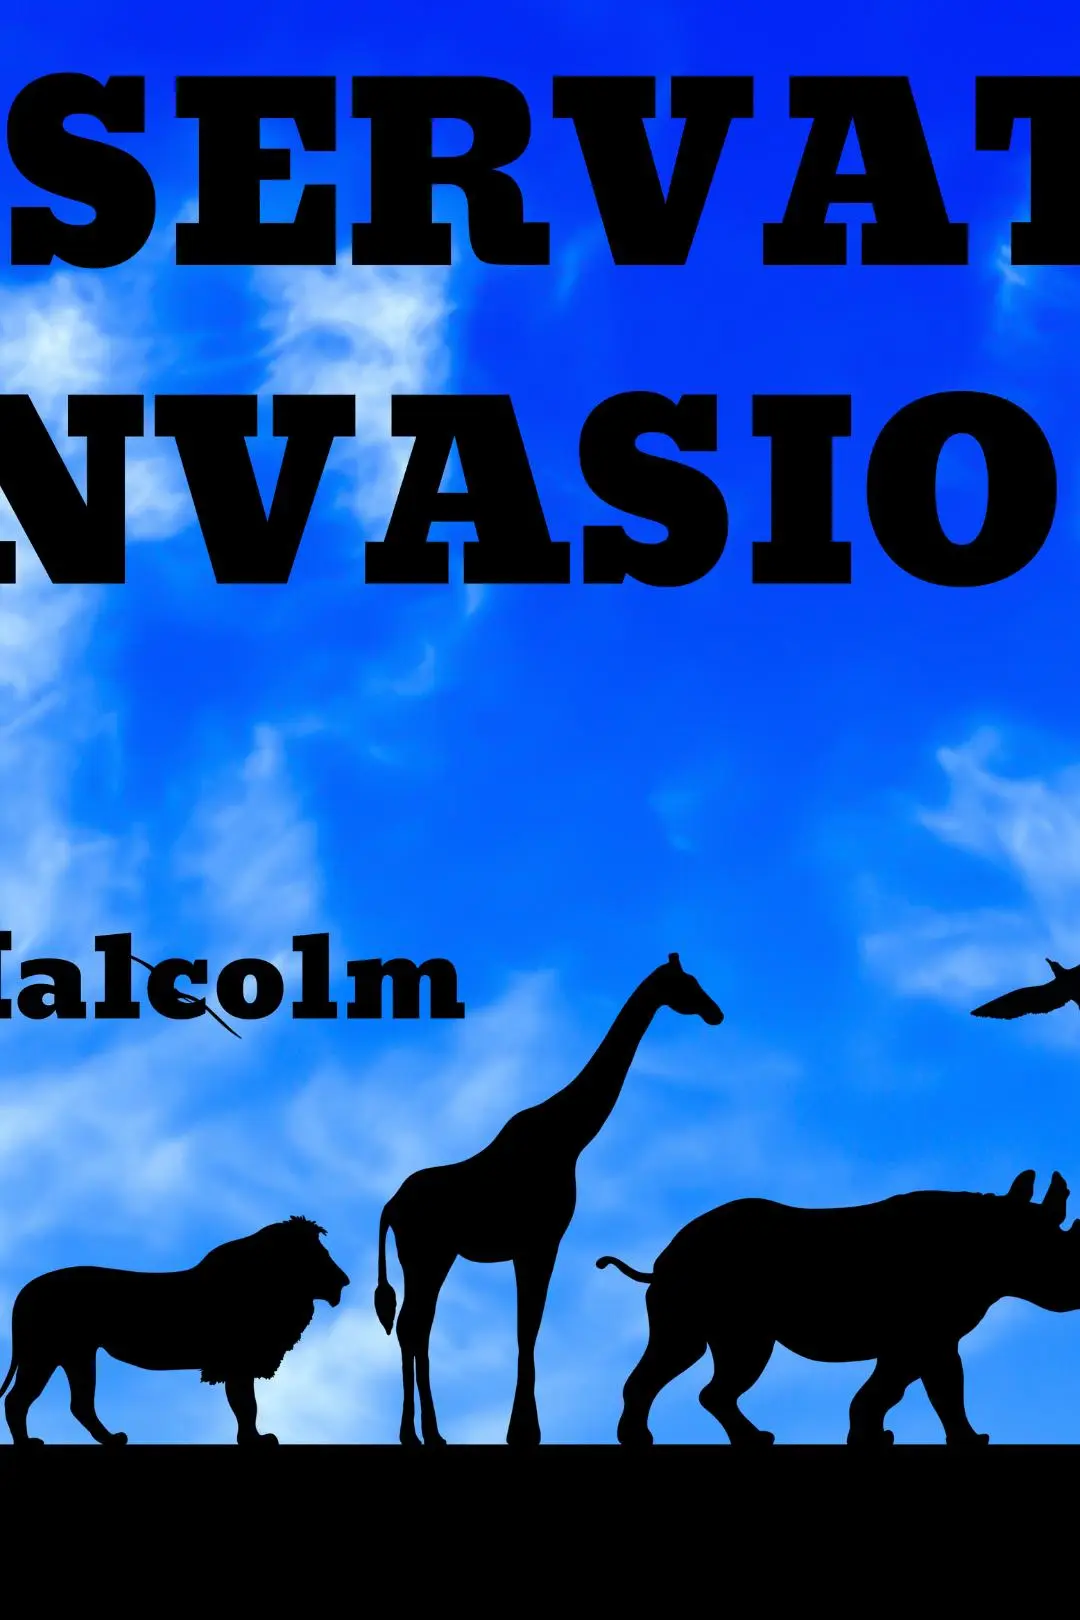 Conservation Invasion_peliplat